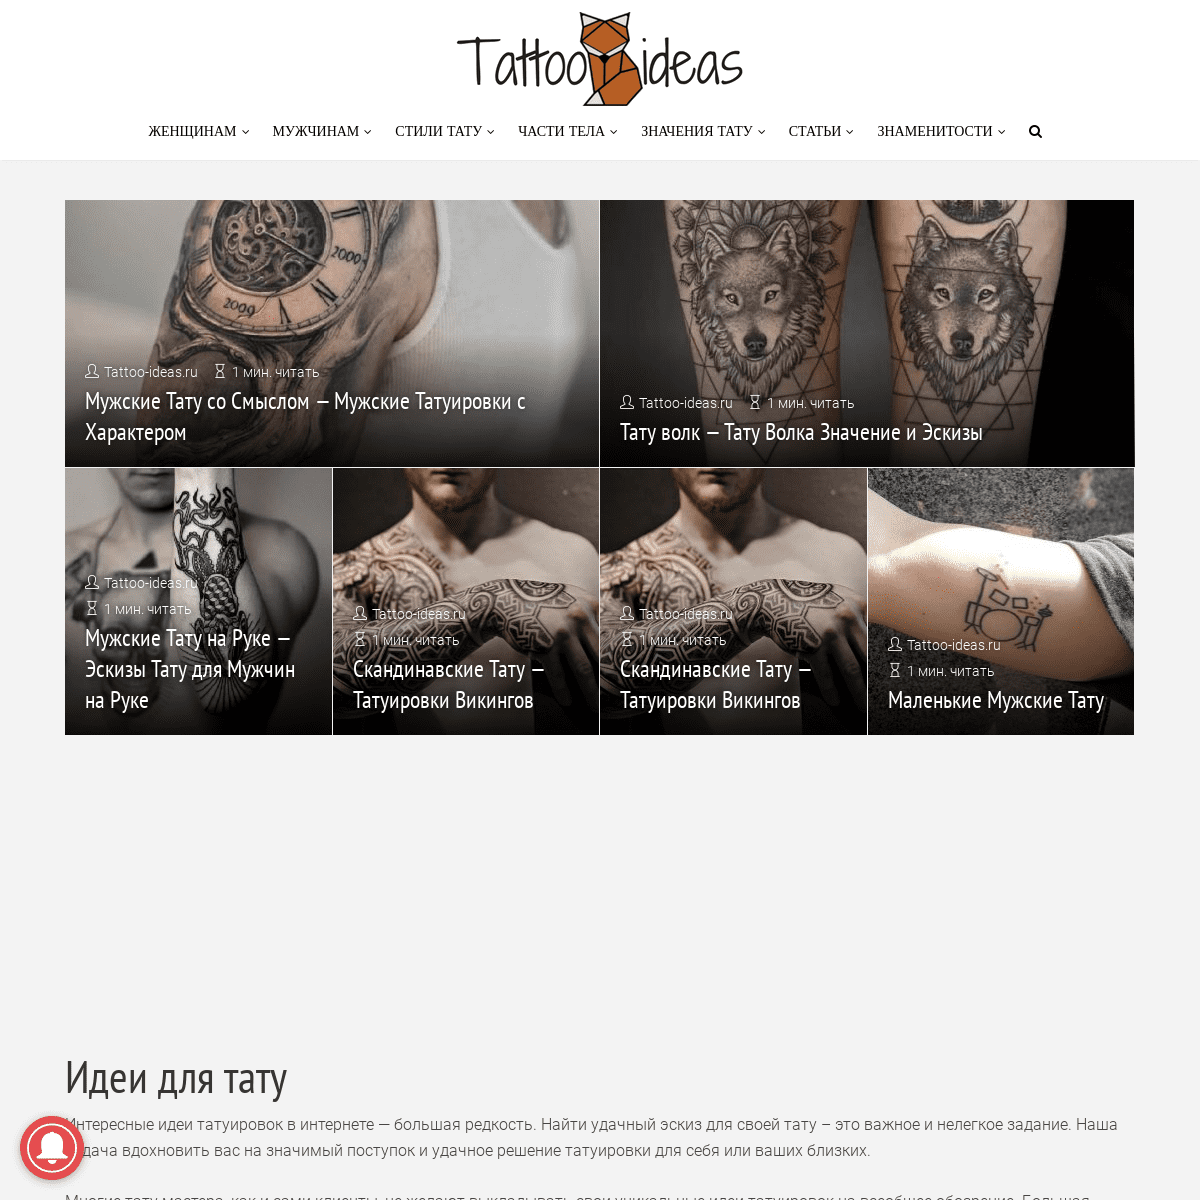 A complete backup of tattoo-ideas.ru